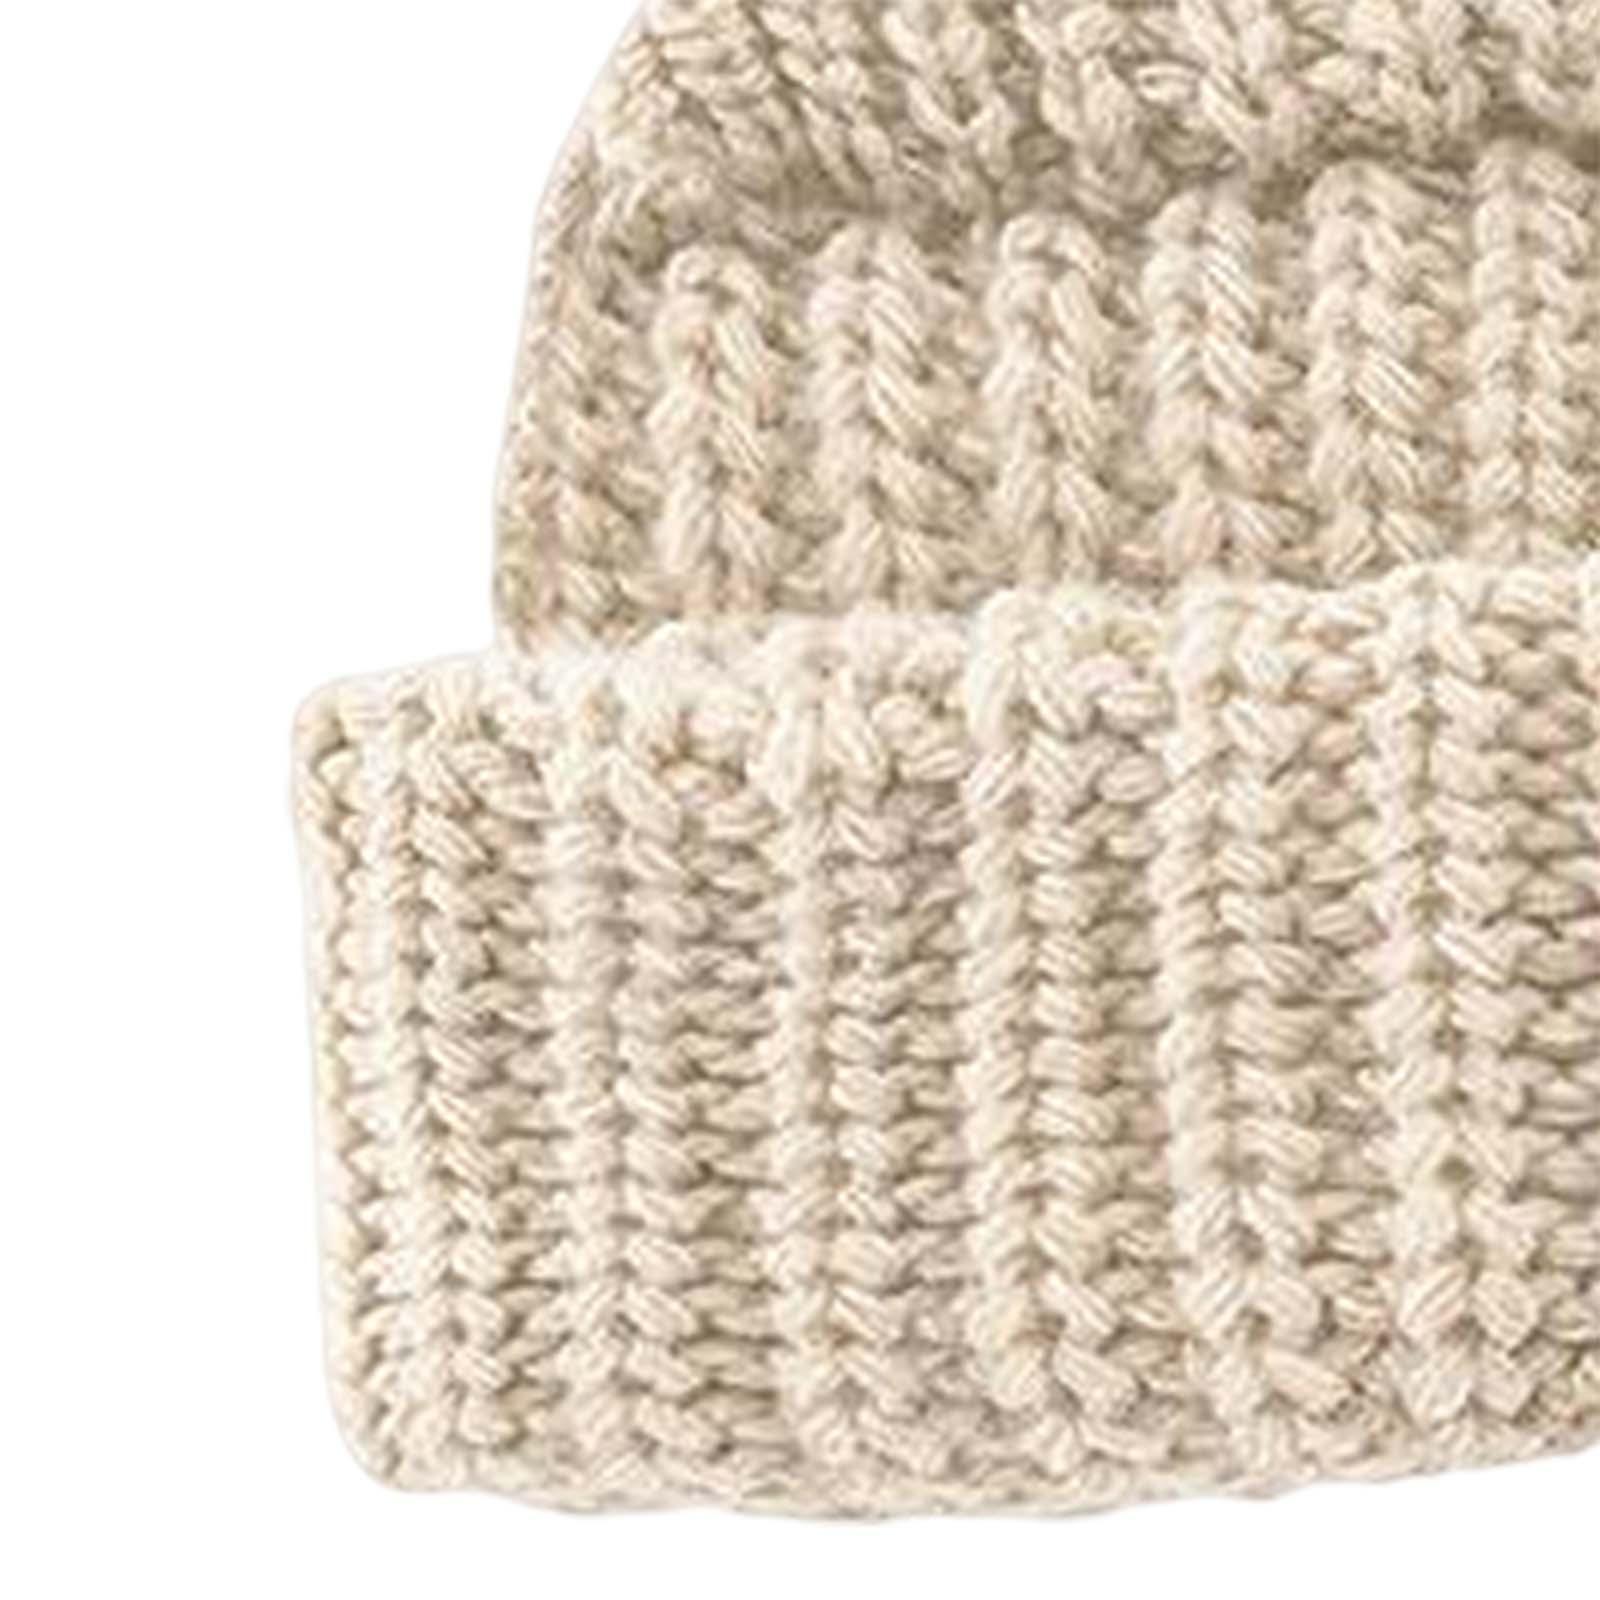 Fashion Knitting Cat Ear Hat Winter Beanie Wool for Outdoor Women Lady